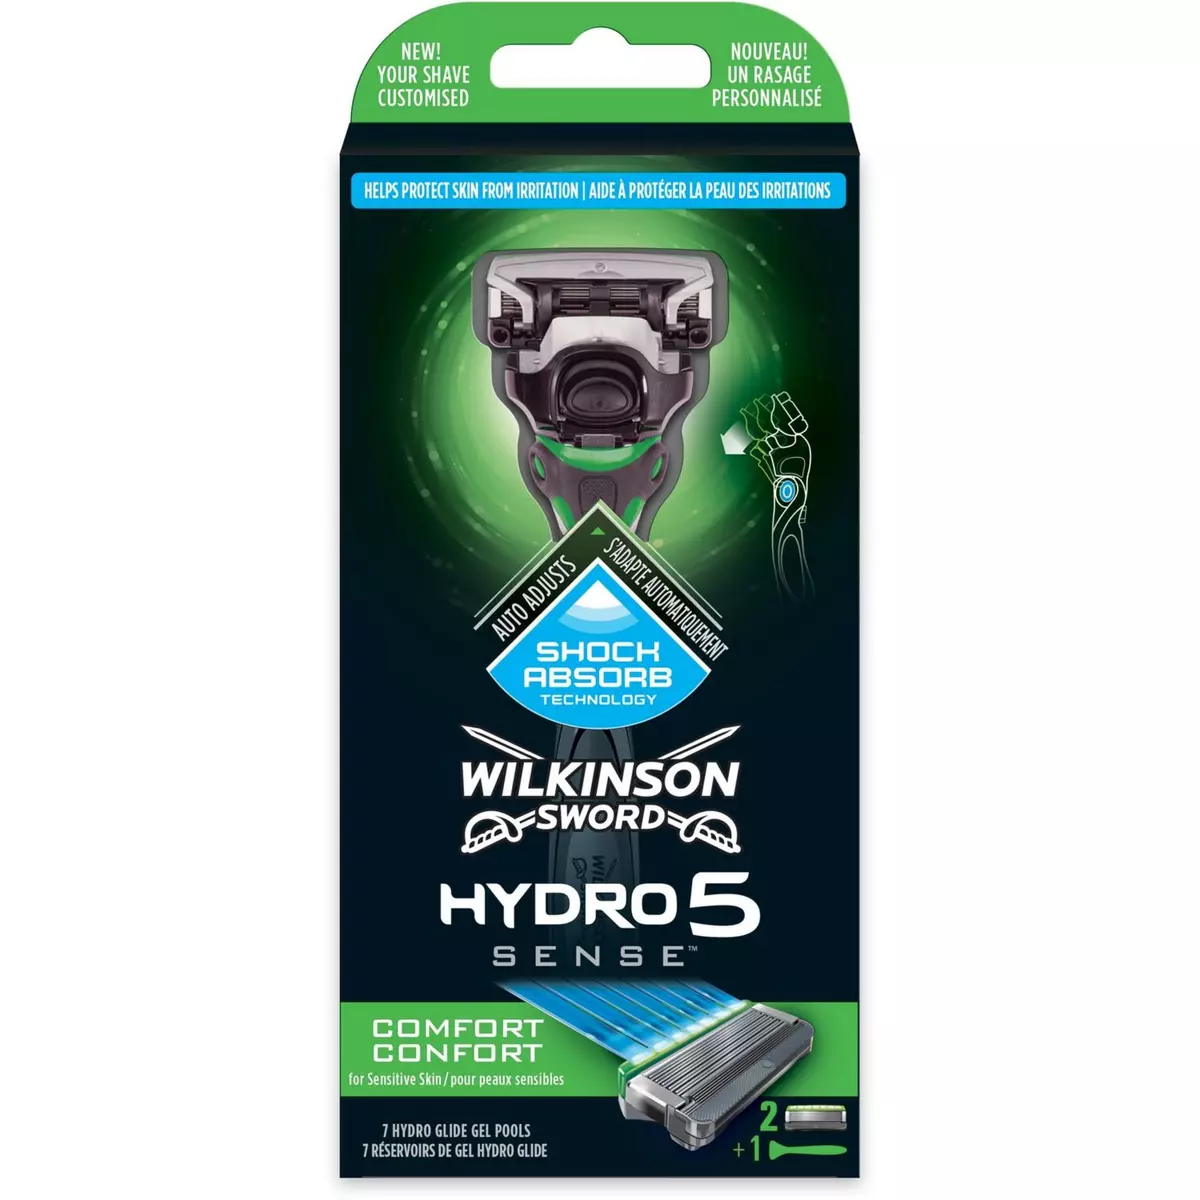 WILKINSON Hydro 5 sense rasoir avec recharges 2 recharges 1 rasoir